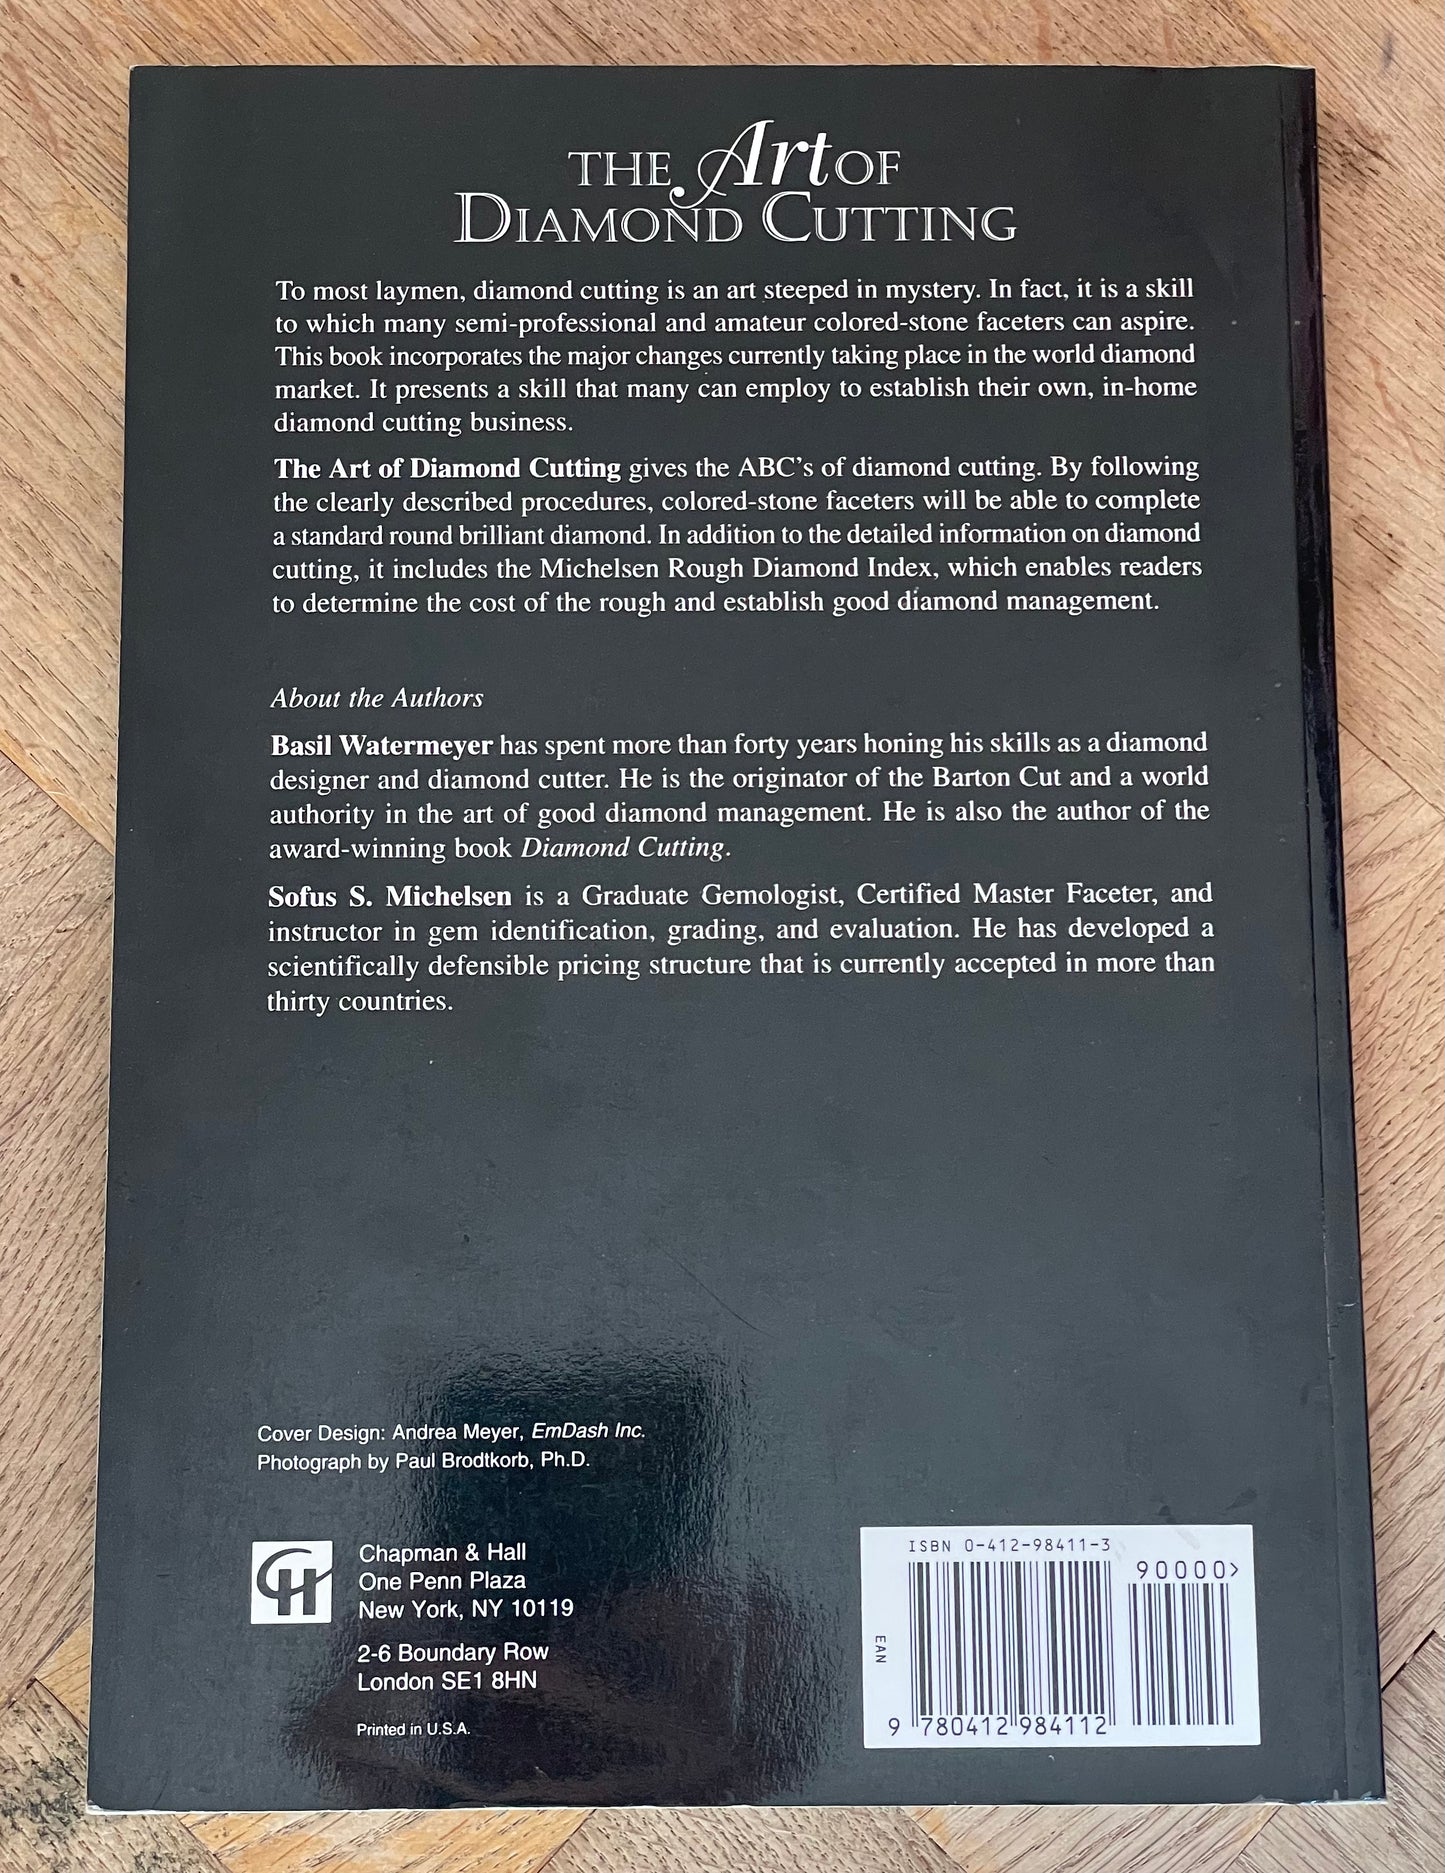 The Art of Diamond Cutting by Basil Watermeyer & Sofia S. Michelsen